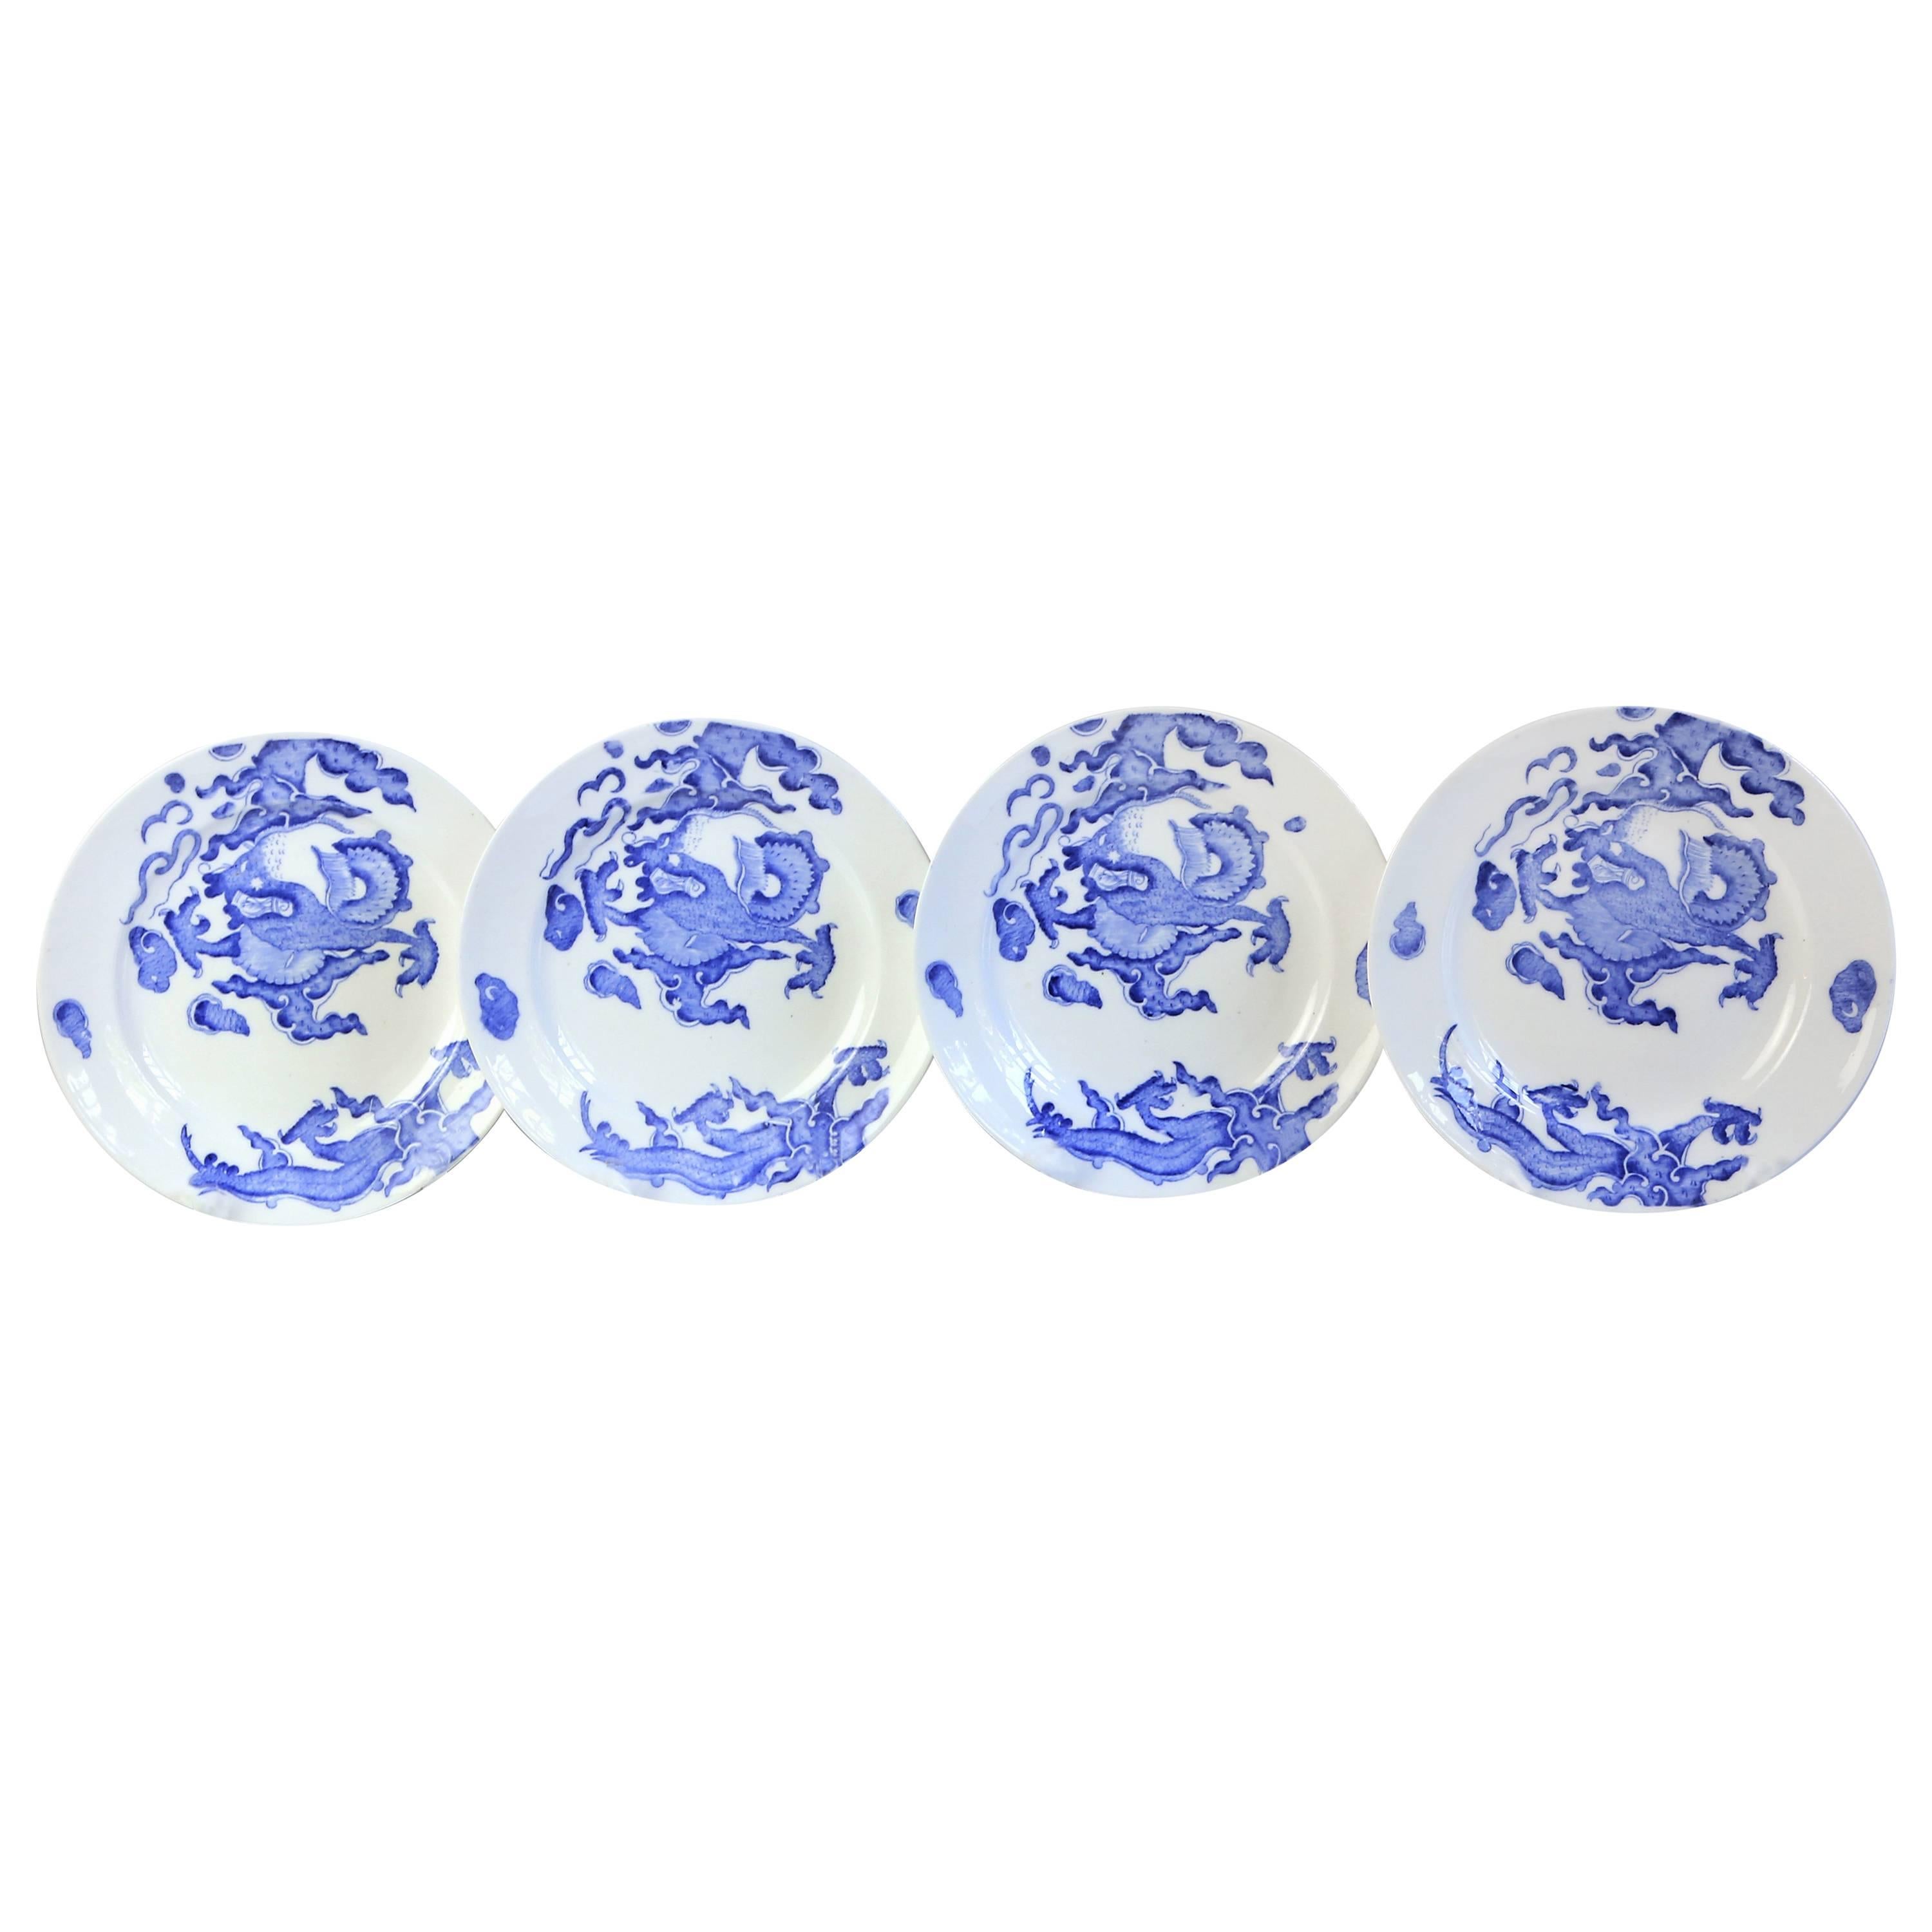 Set of Four Blue Dragon Plates by Coalport